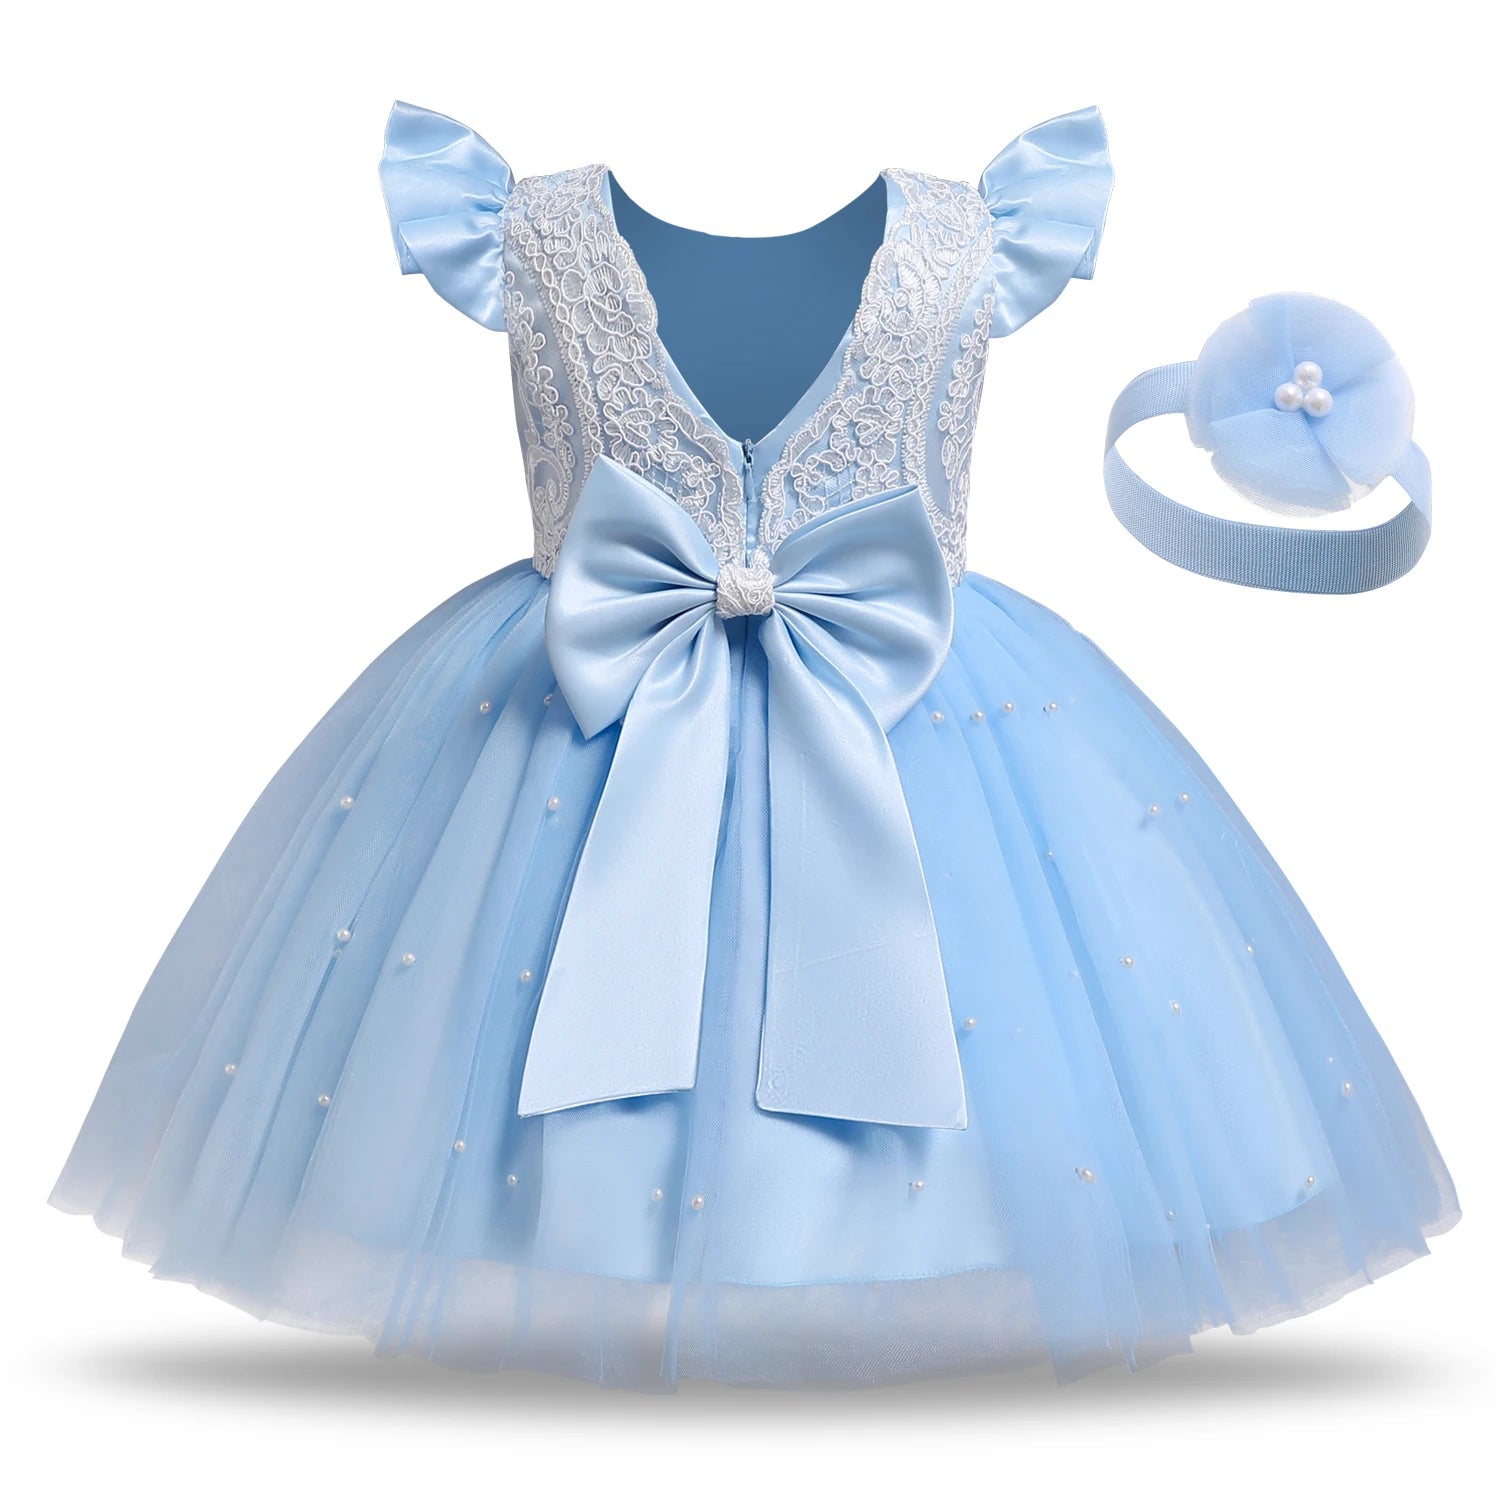 Elegant A-Line Knee Length Sleeveless Flower Girl Dresses BLUE by Baby Minaj Cruz